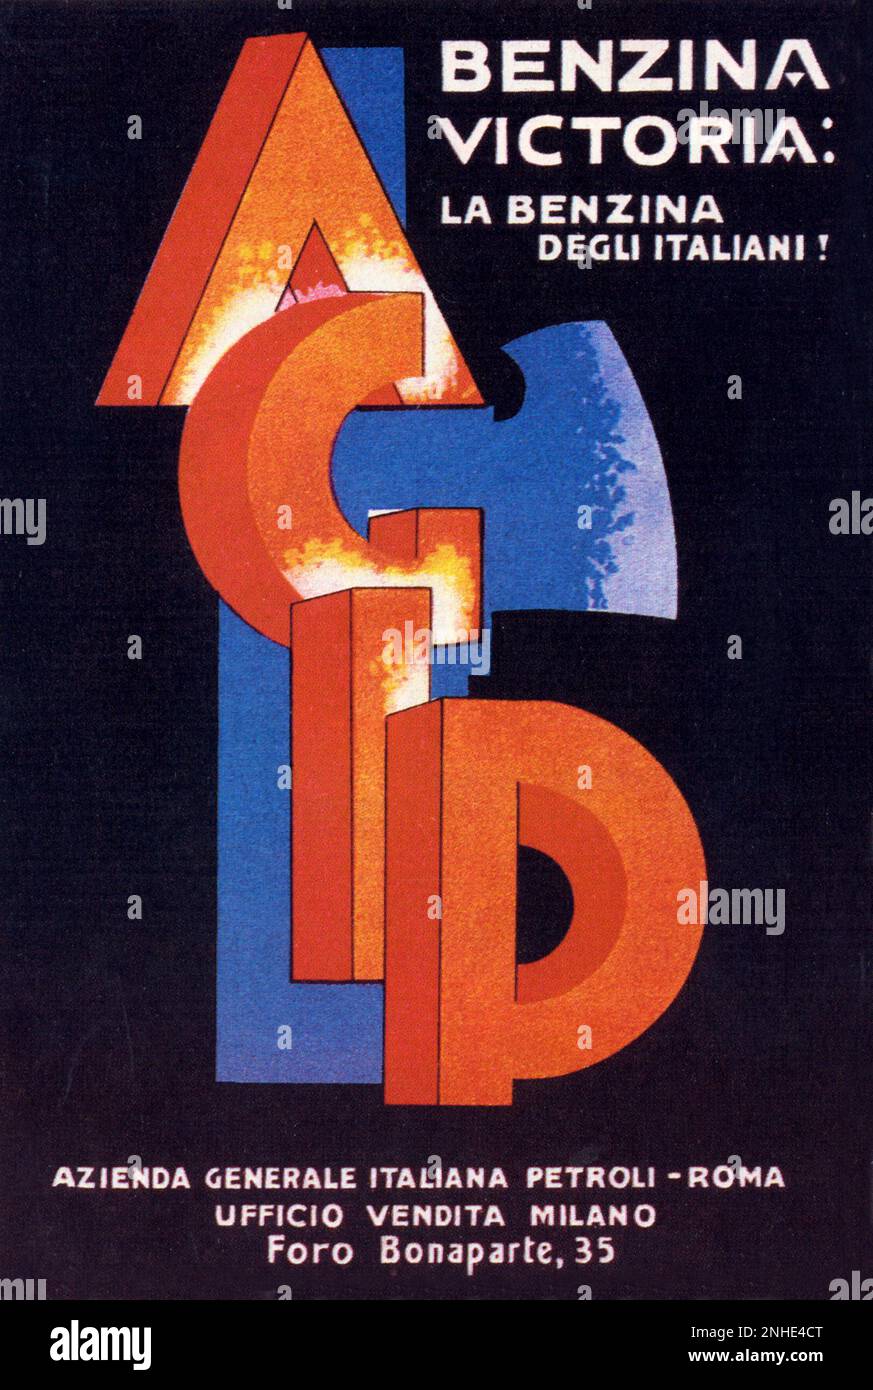 1930 ca.   , Italy : Poster advertising BENZINA VICTORIA AGIP ( Azienda Generale Italiana Petroli )   - FASCISMO - FASCIST -  FASCISTA - FASCISM - ANNI TRENTA - 30's - '30 - pubblicità - manifesto pubblicitario  - SECONDA GUERRA MONDIALE - WORLD WAR II - WW 2nd - ART DECO - decò - PETROLIO - GASOLINE  ----  Archivio GBB Stock Photo